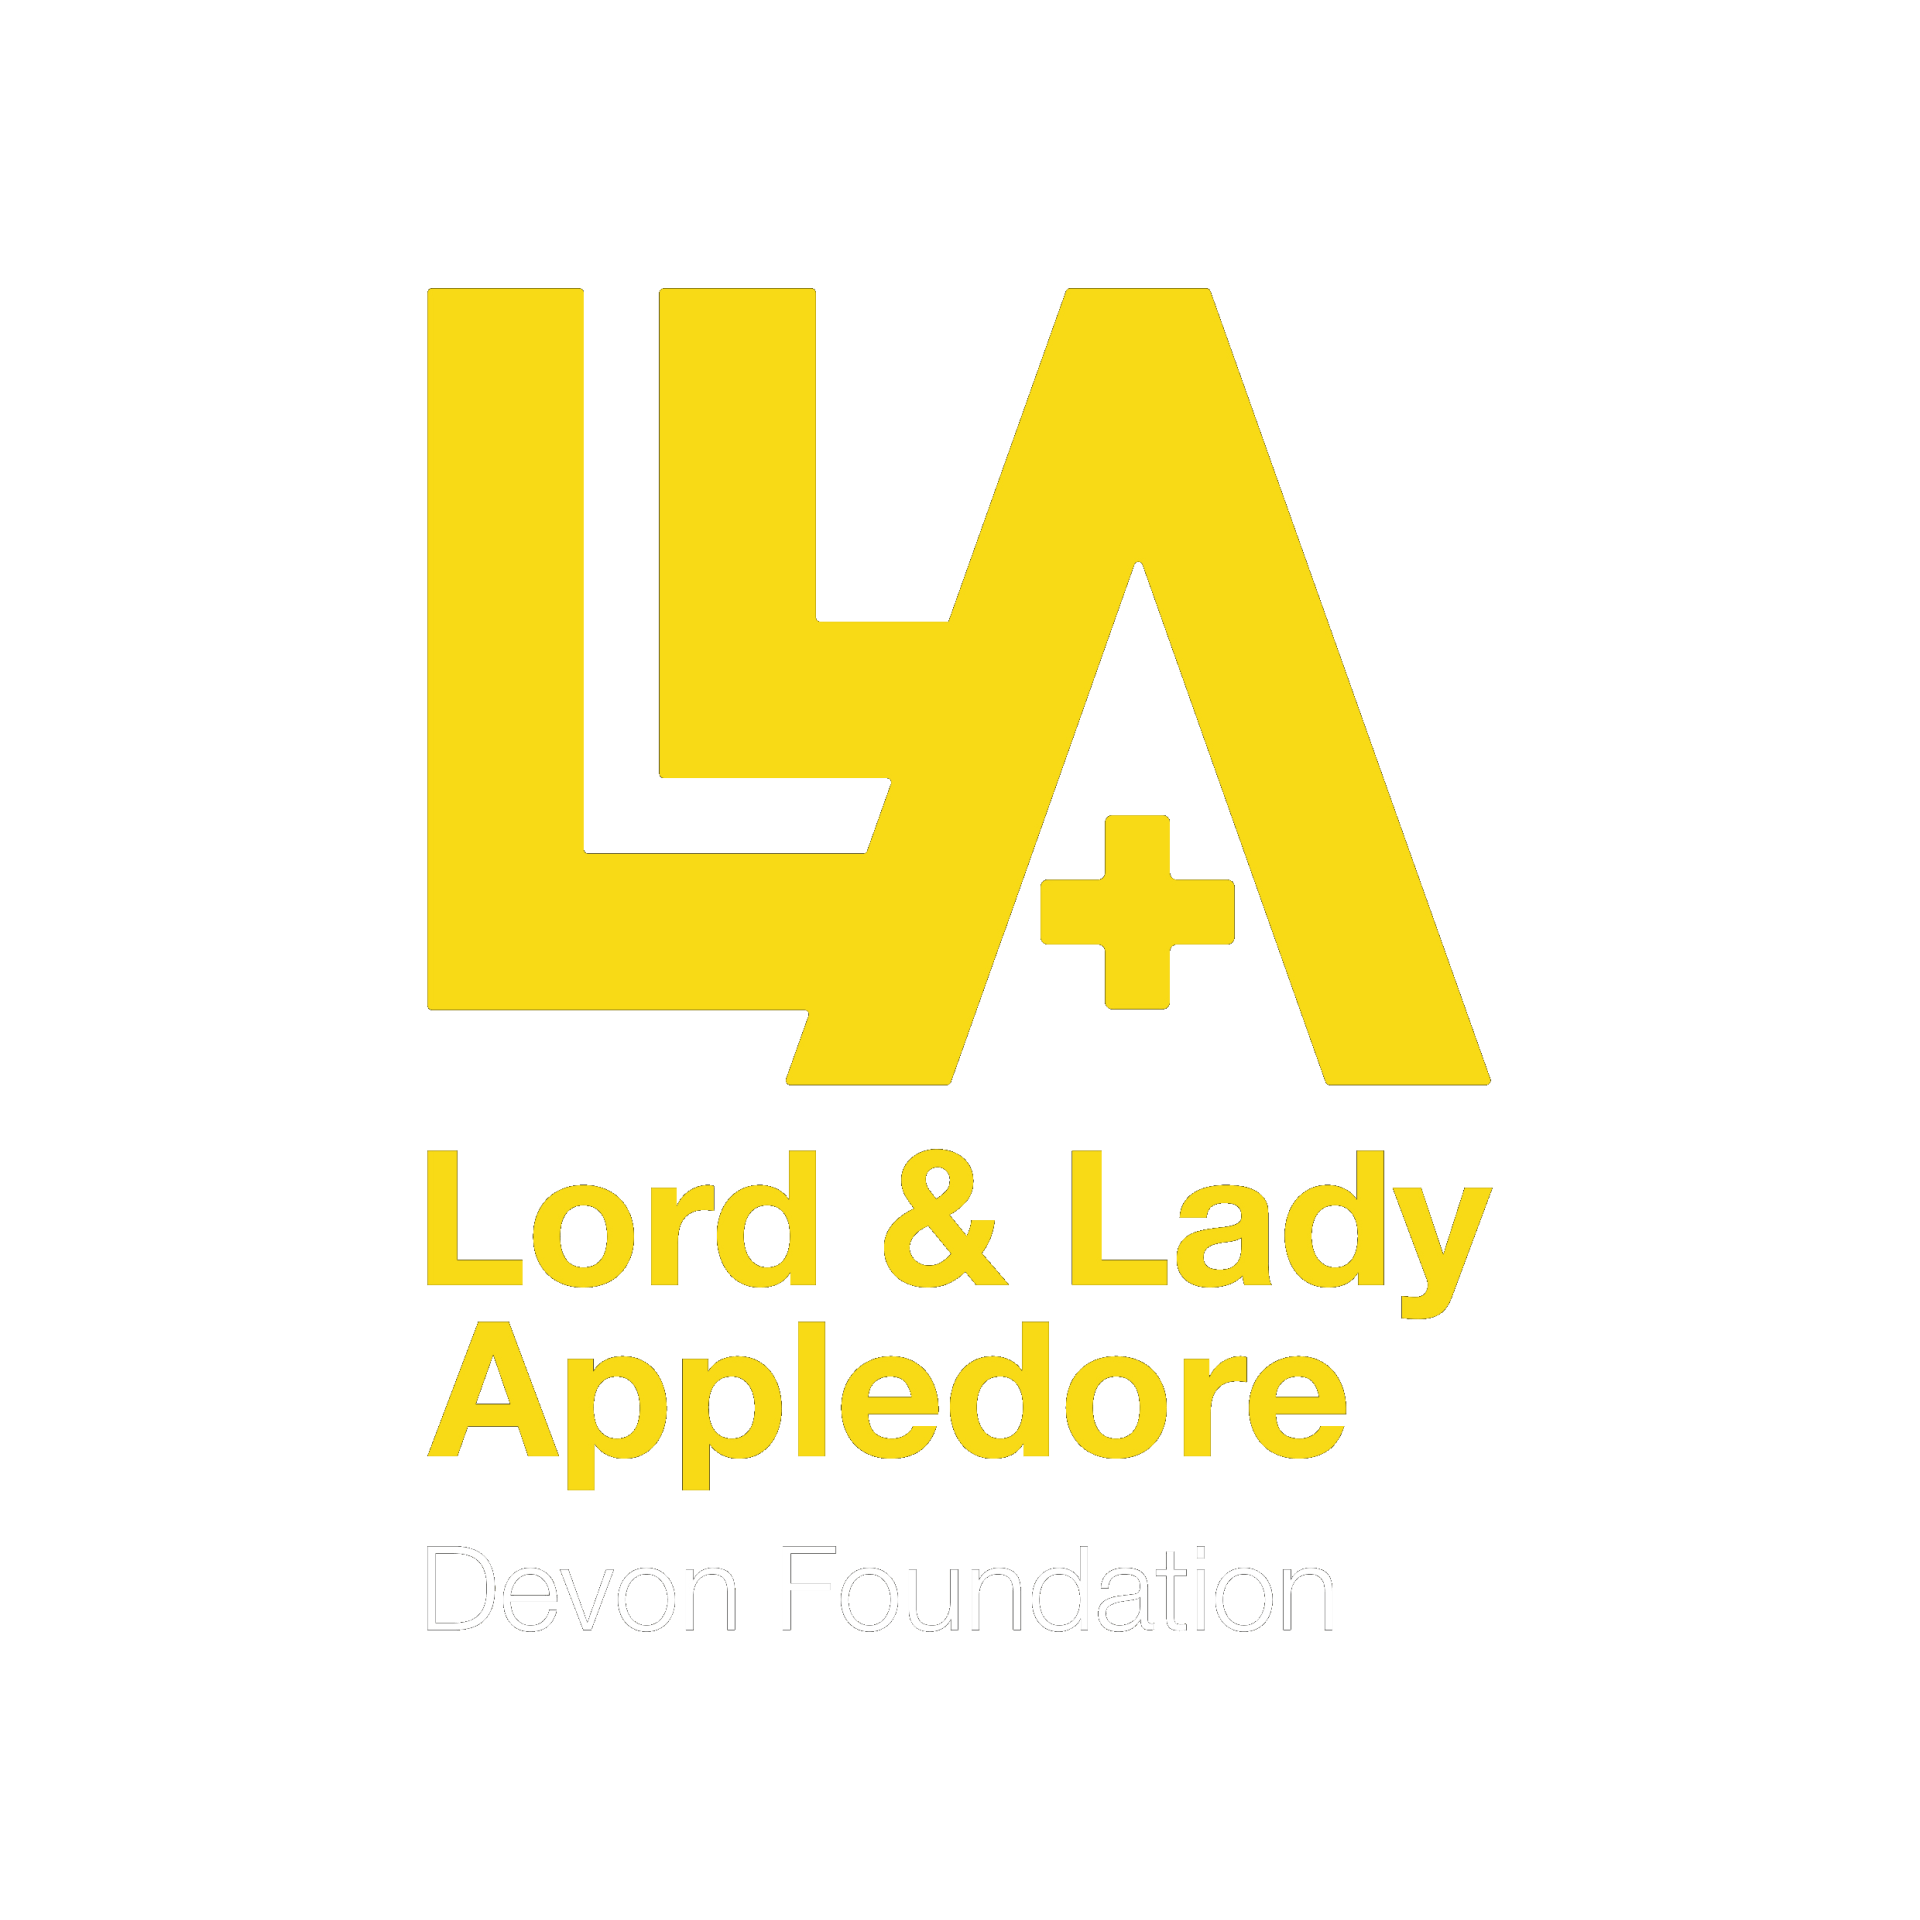 Lord & Lady Appledore